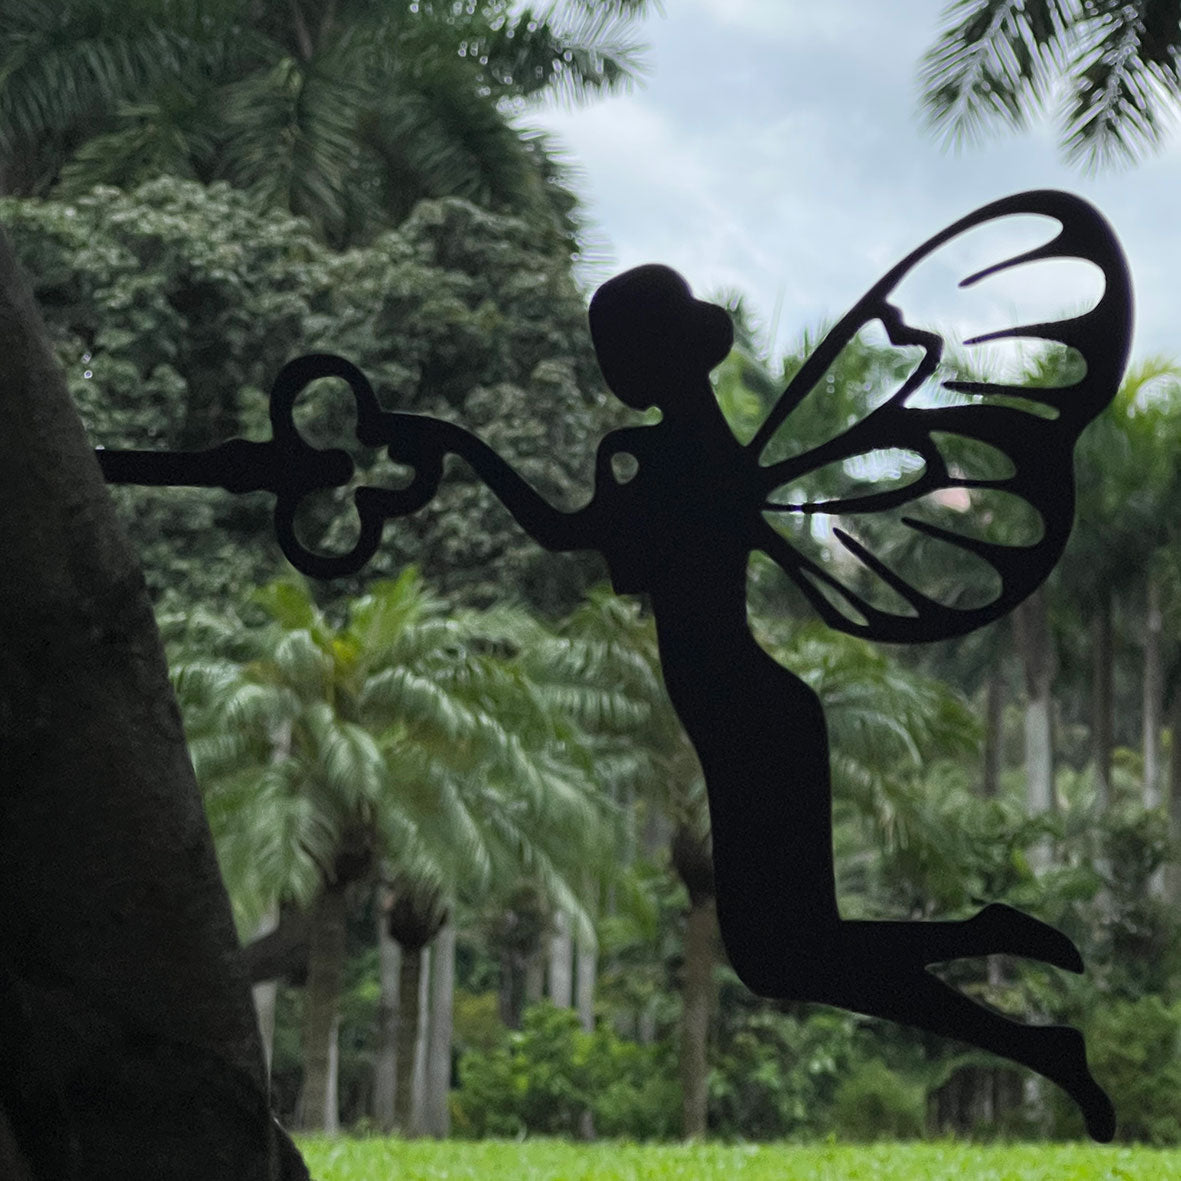 Metal Fairy Silhouette Open Door With Key Decoration Ornament For Garden